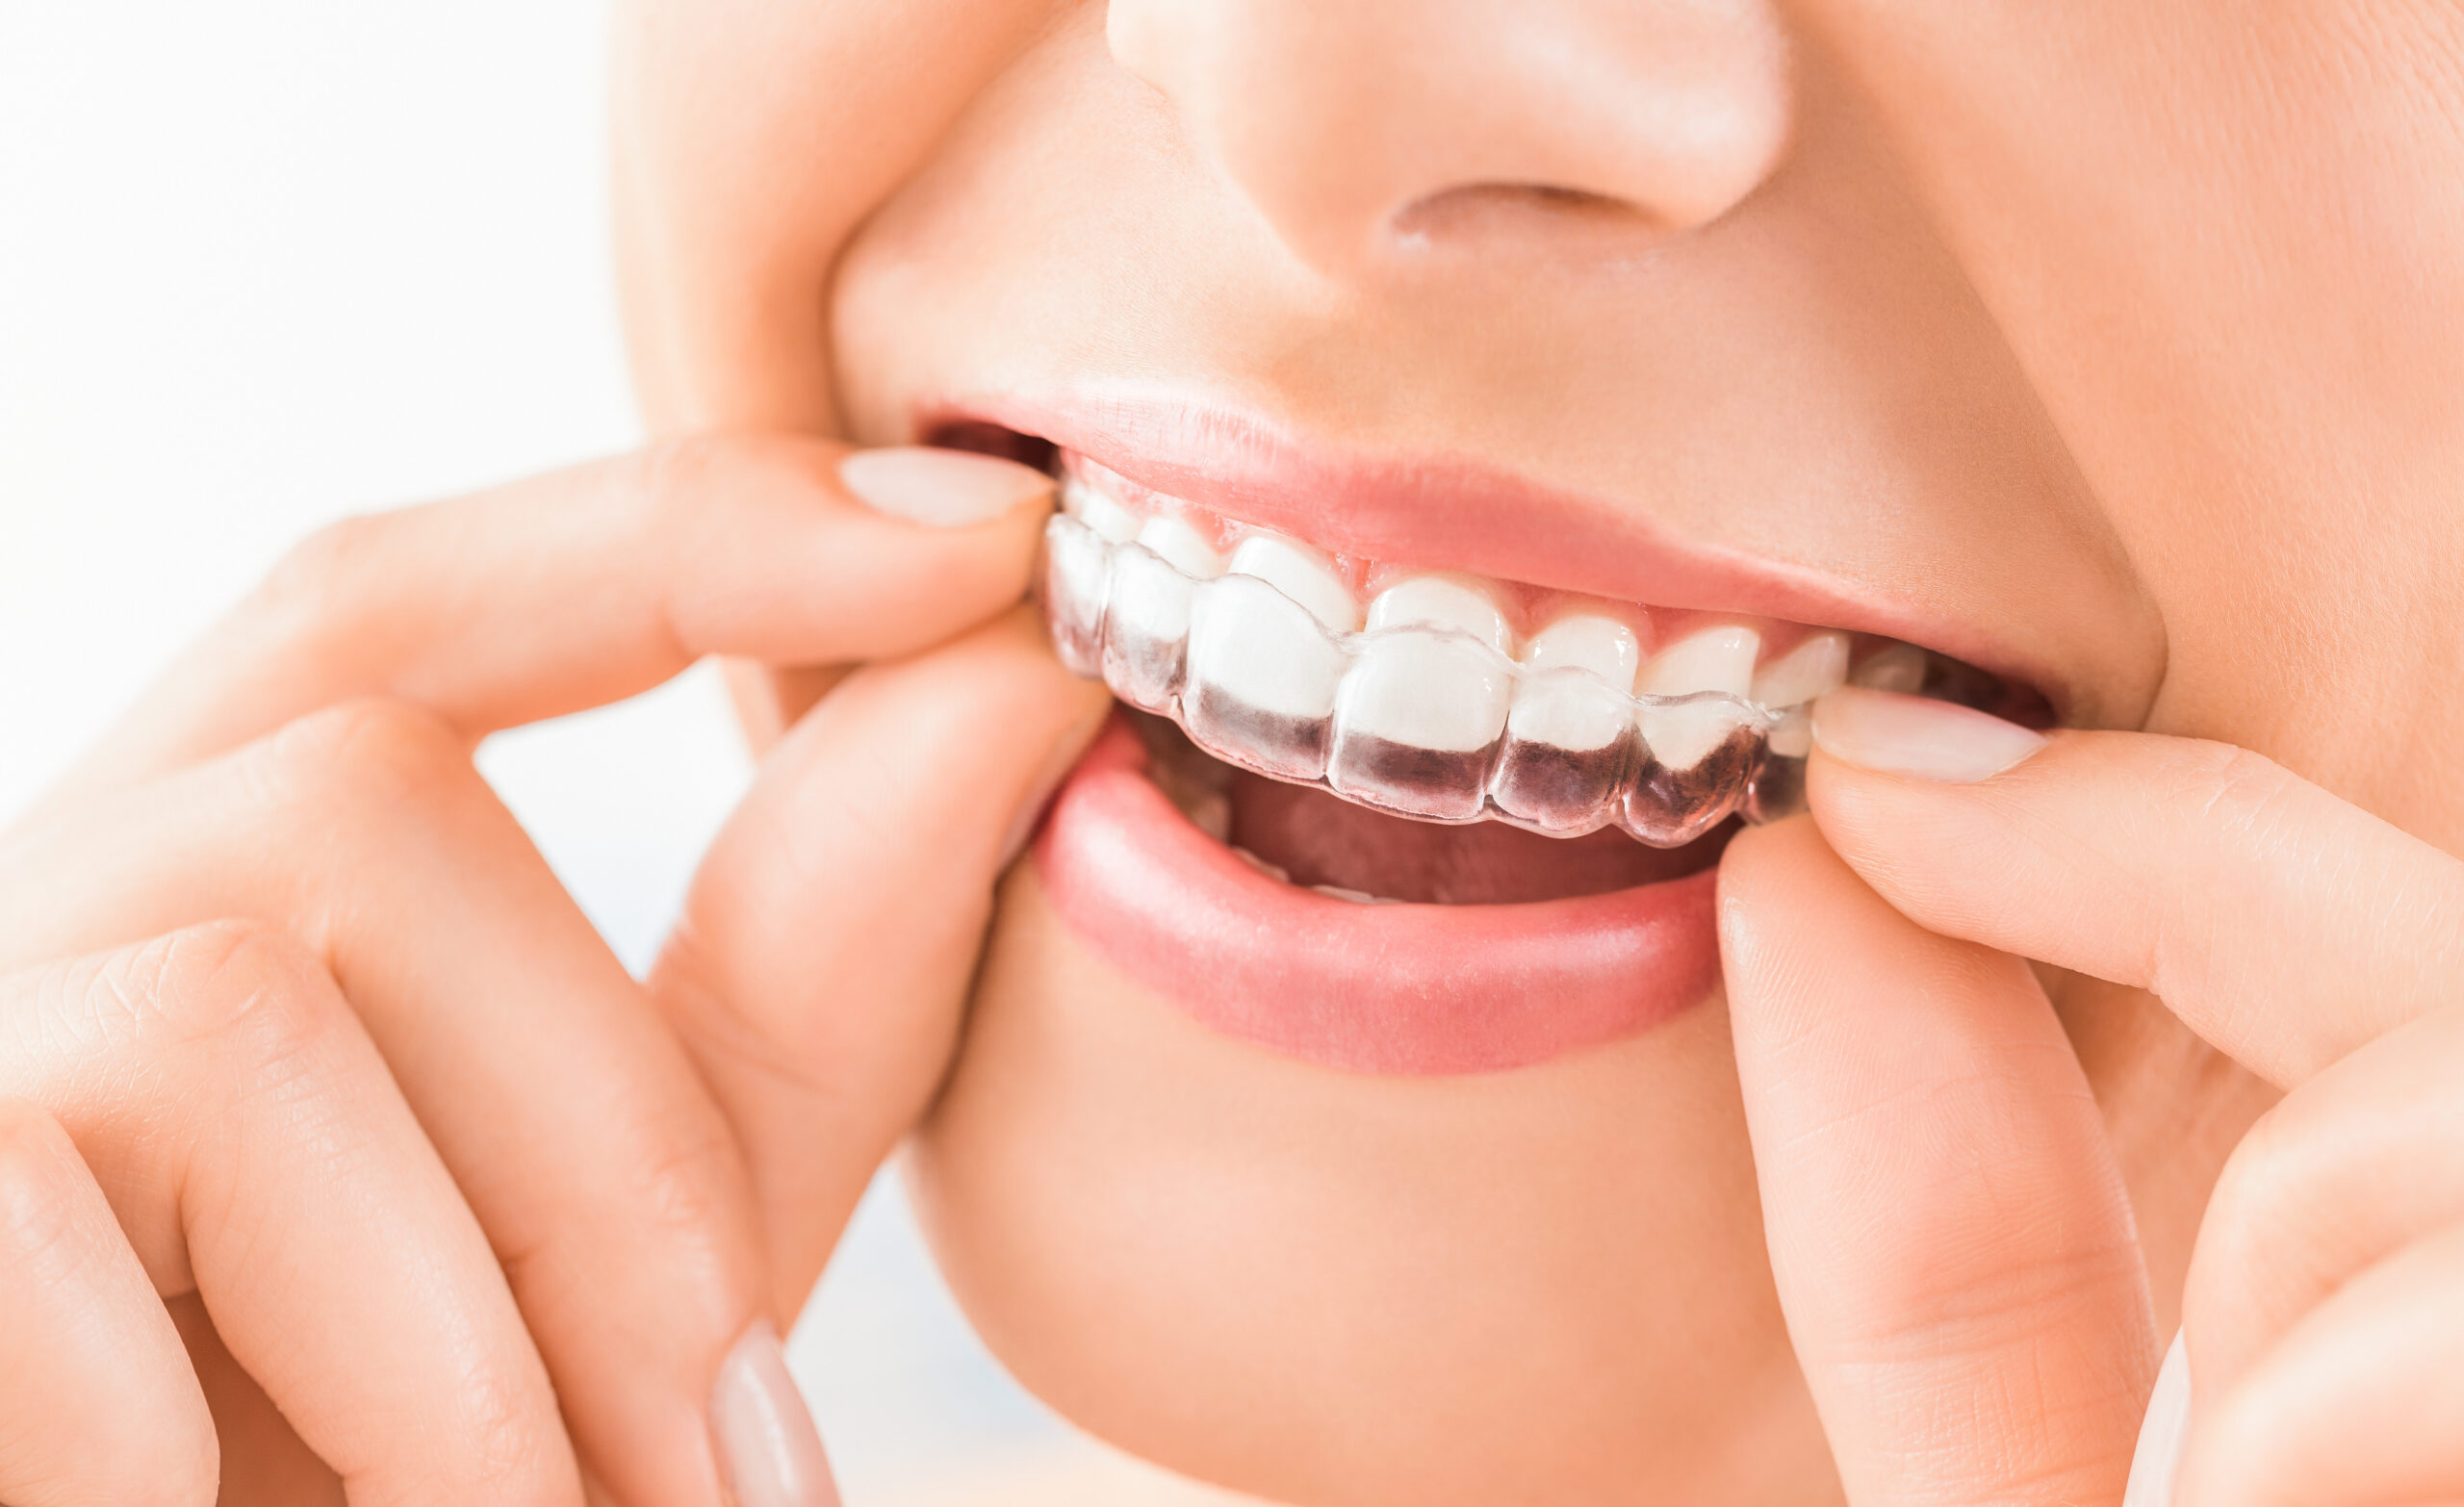 Dedicated Dental aligner orthodontics